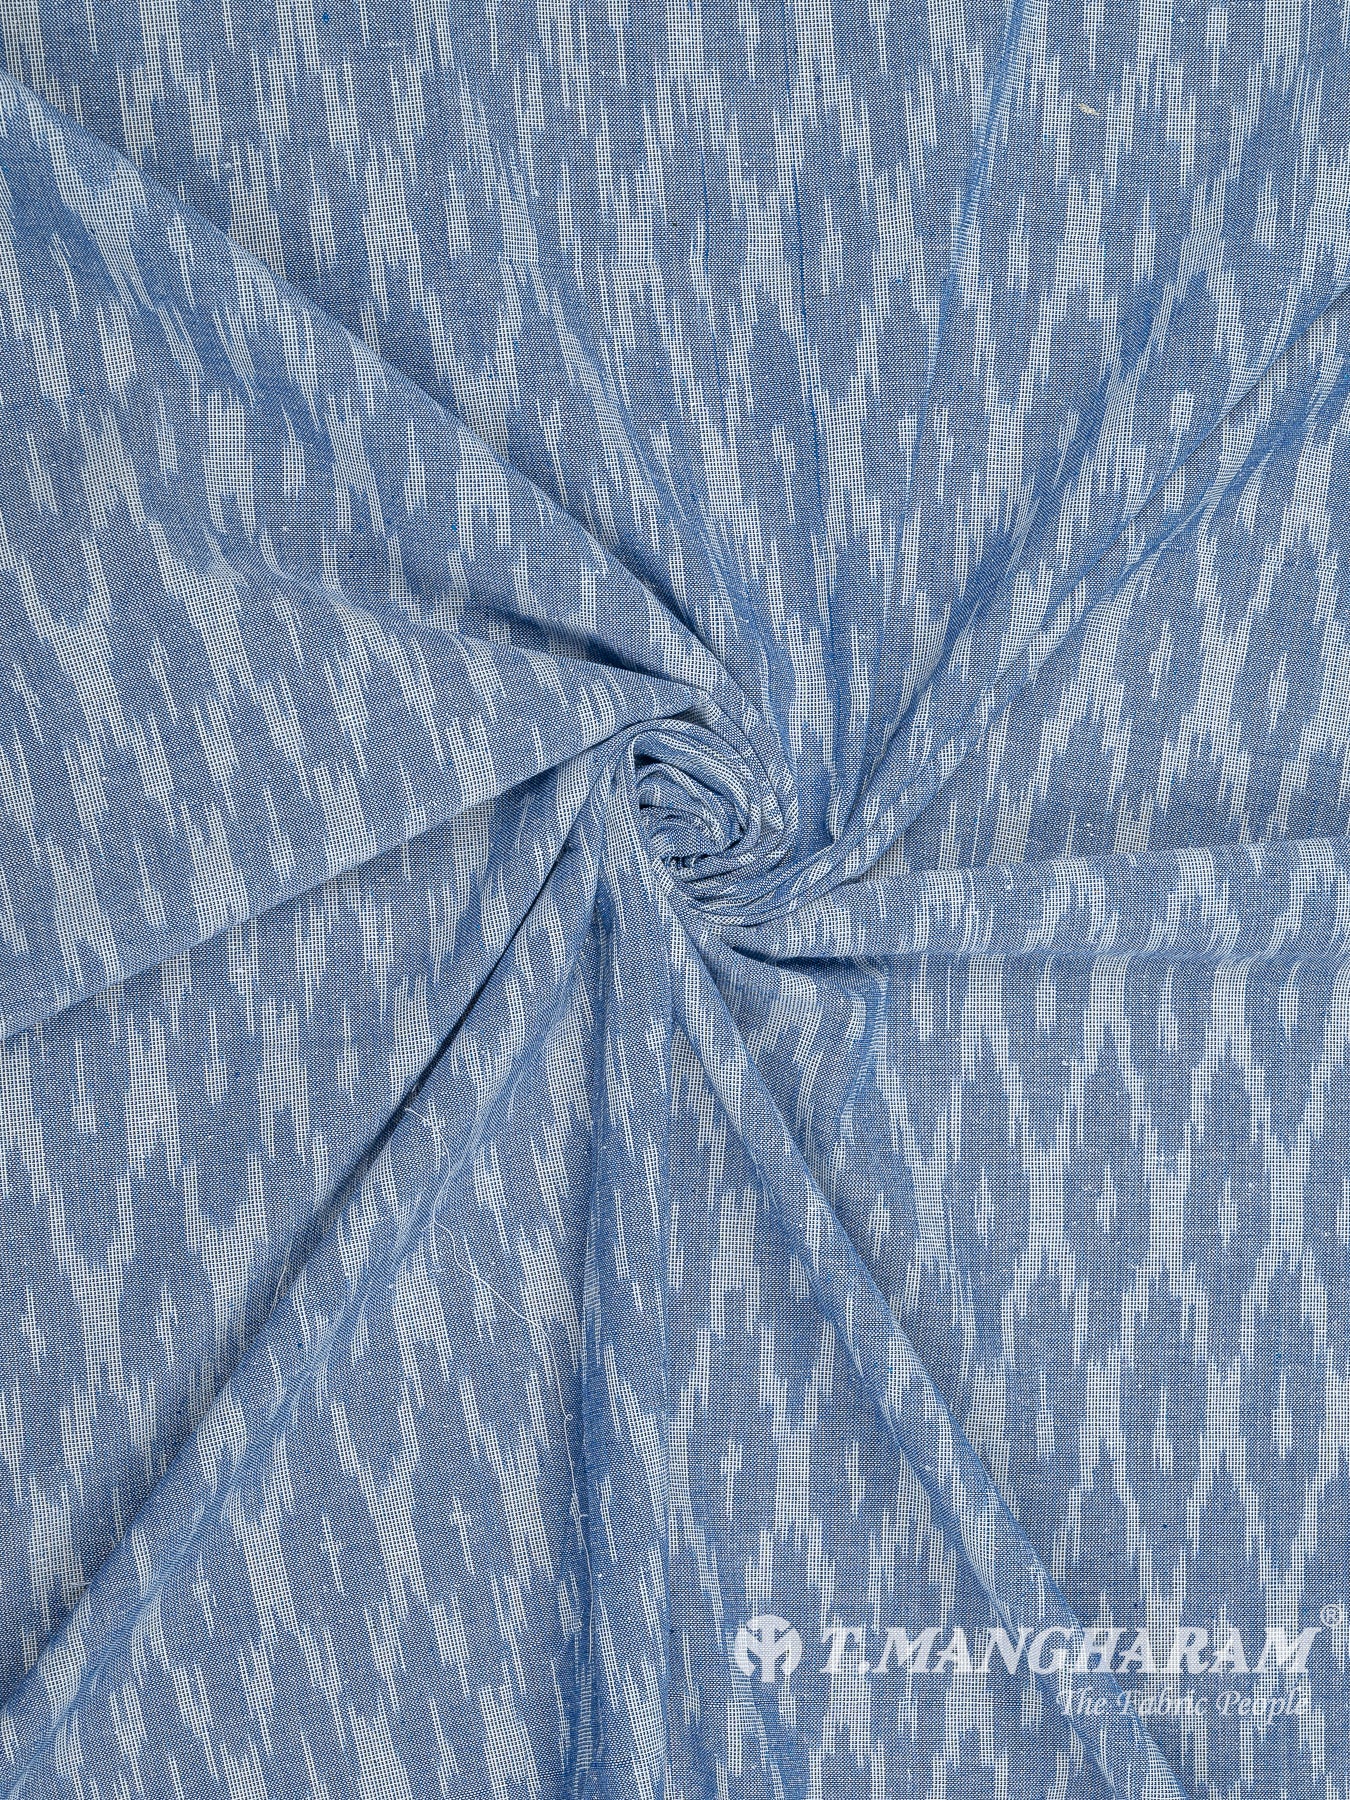 Blue Cotton Ikat Print Fabric - EB5842 view-1